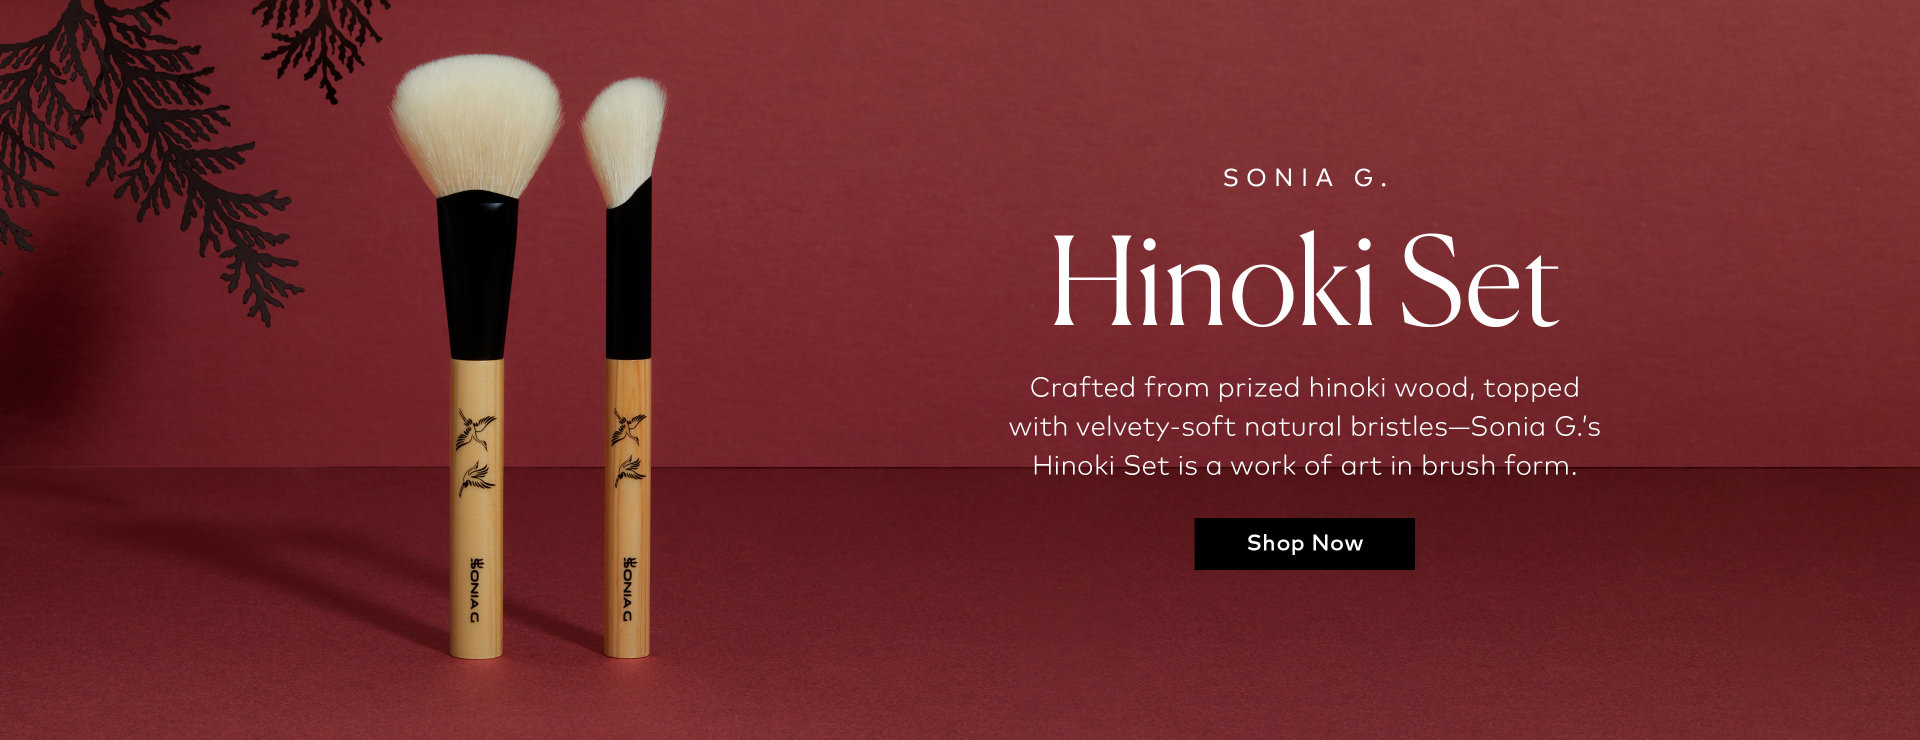 Shop Sonia G.'s Hinoki Set on Beautylish.com